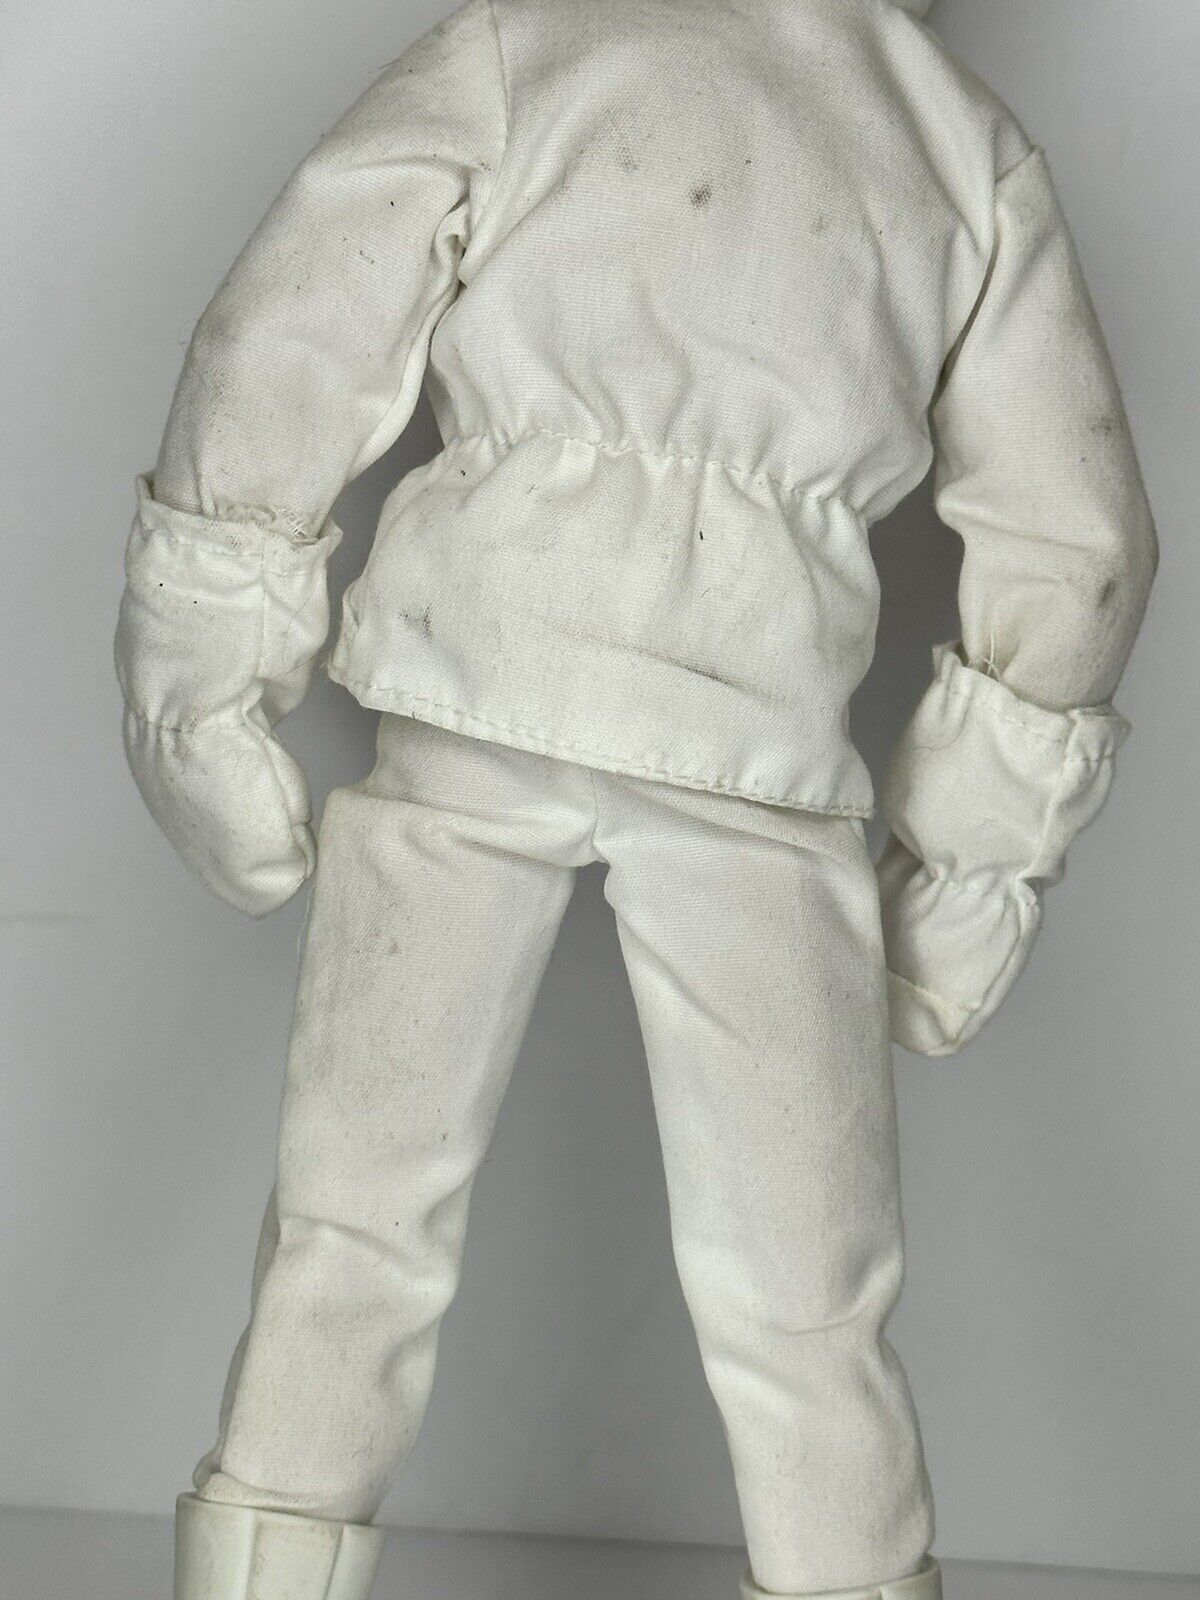 Collectible 1993 G.I. Joe 12" Arctic Gear Clothes Military Action Figure – Vintage Toy Soldier - TreasuTiques